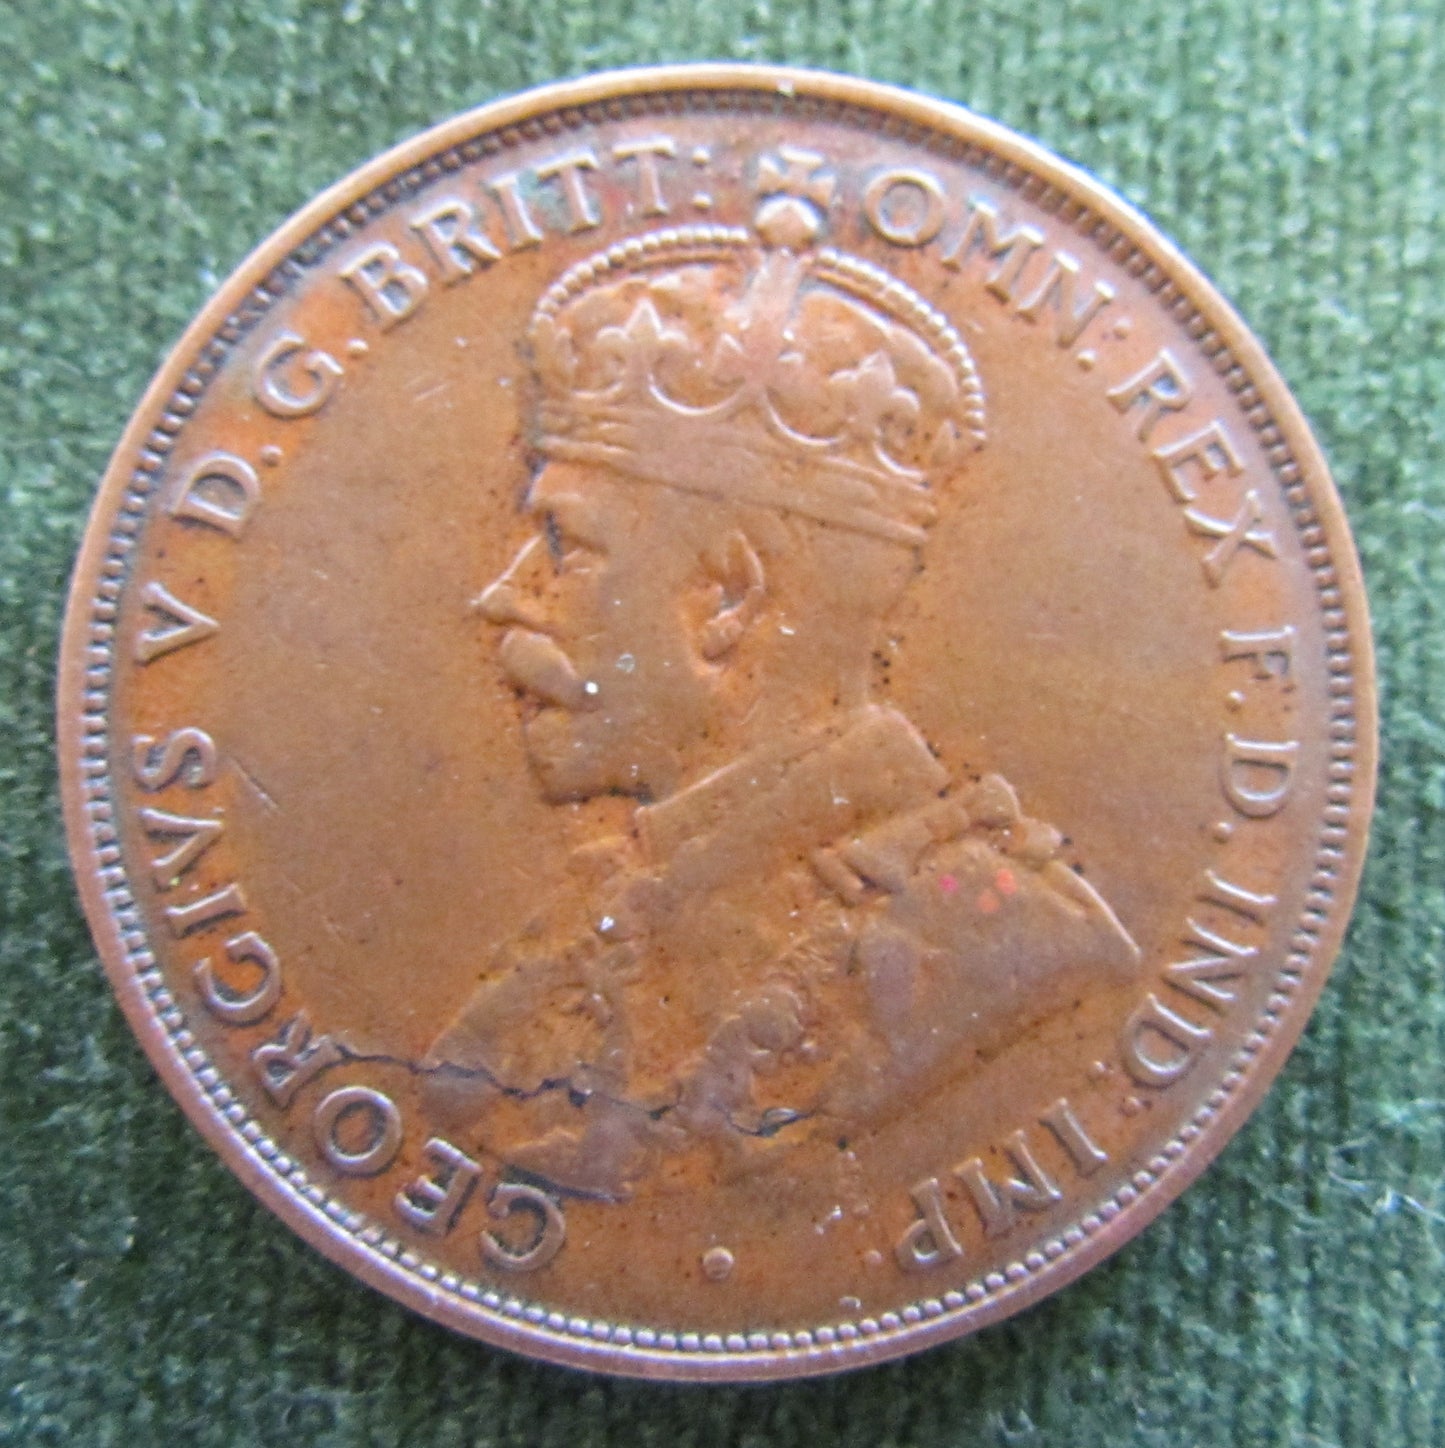 Australian 1934 1d 1 Penny King George V Coin - Variety Planchet Error